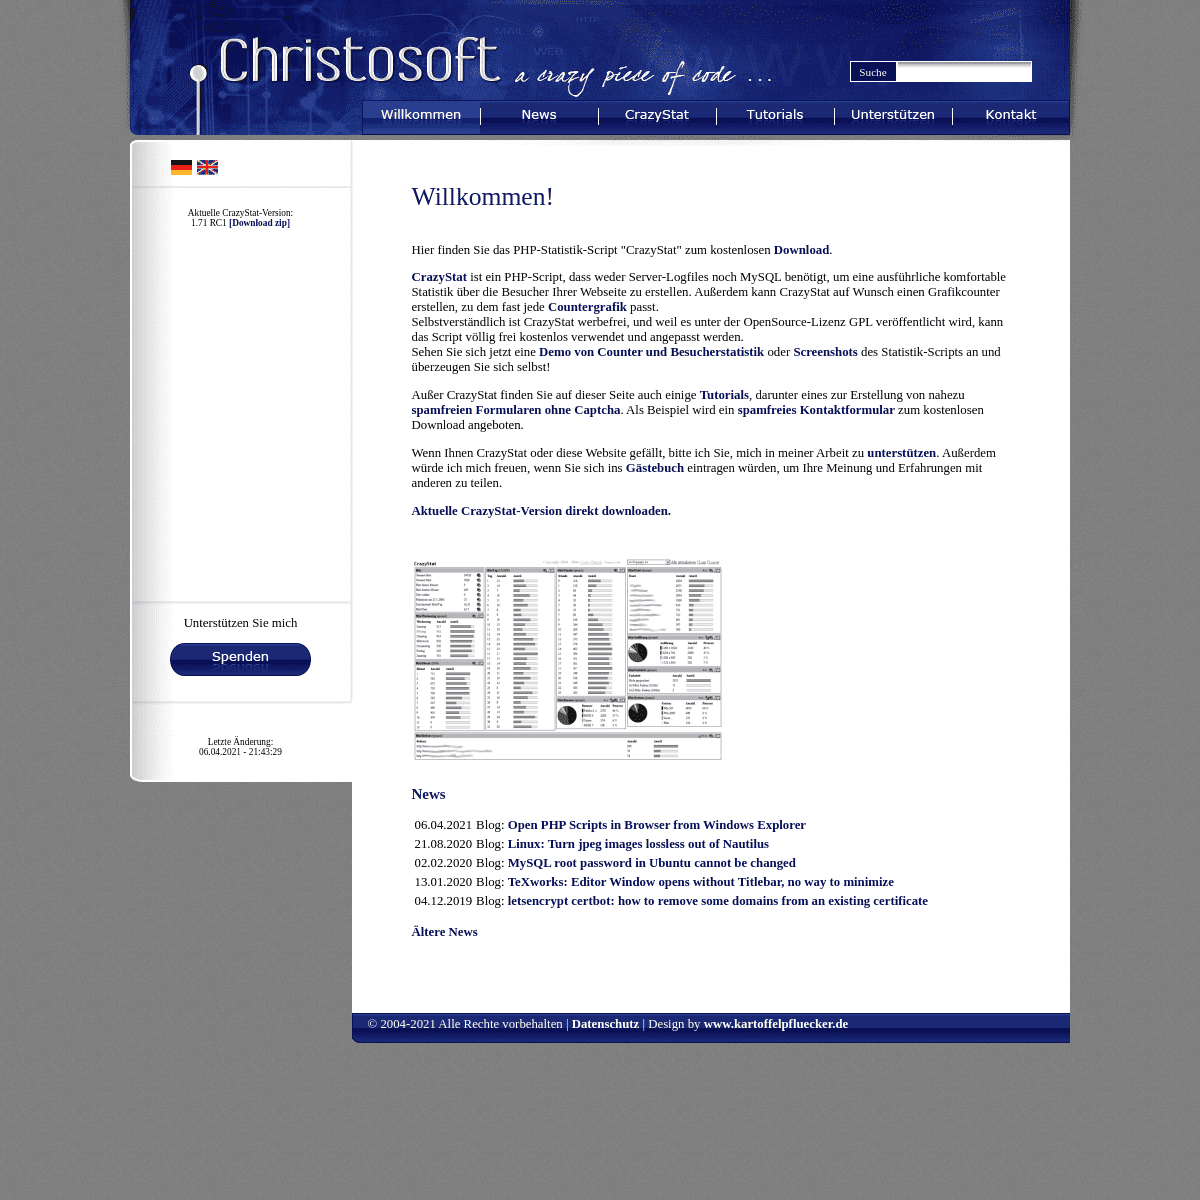 A complete backup of https://christosoft.de